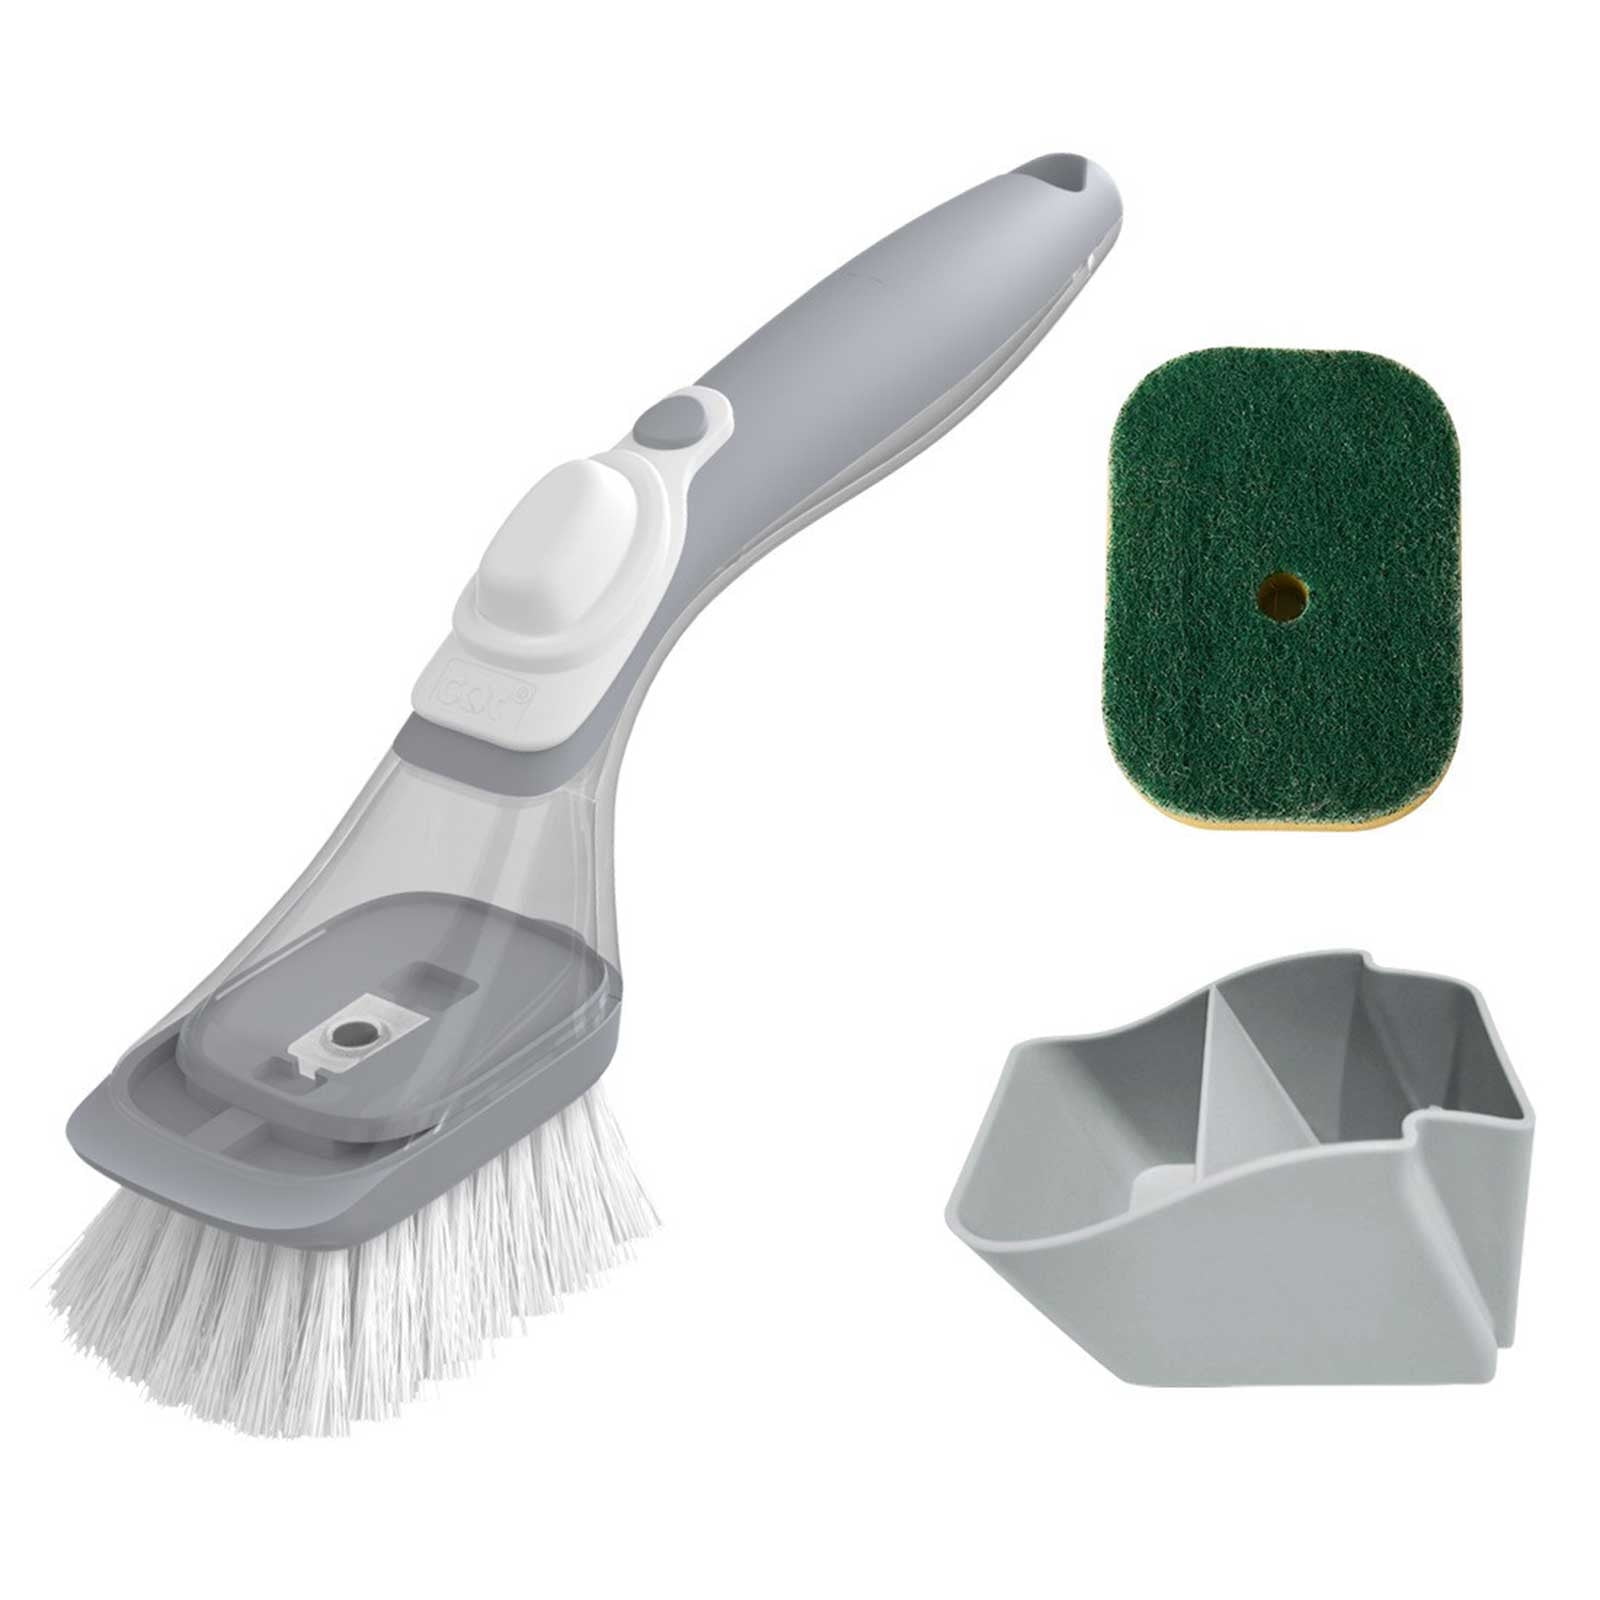 PRINxy Brushes For Dishwashing Brushes,2 In 1 Sponge And Bristles